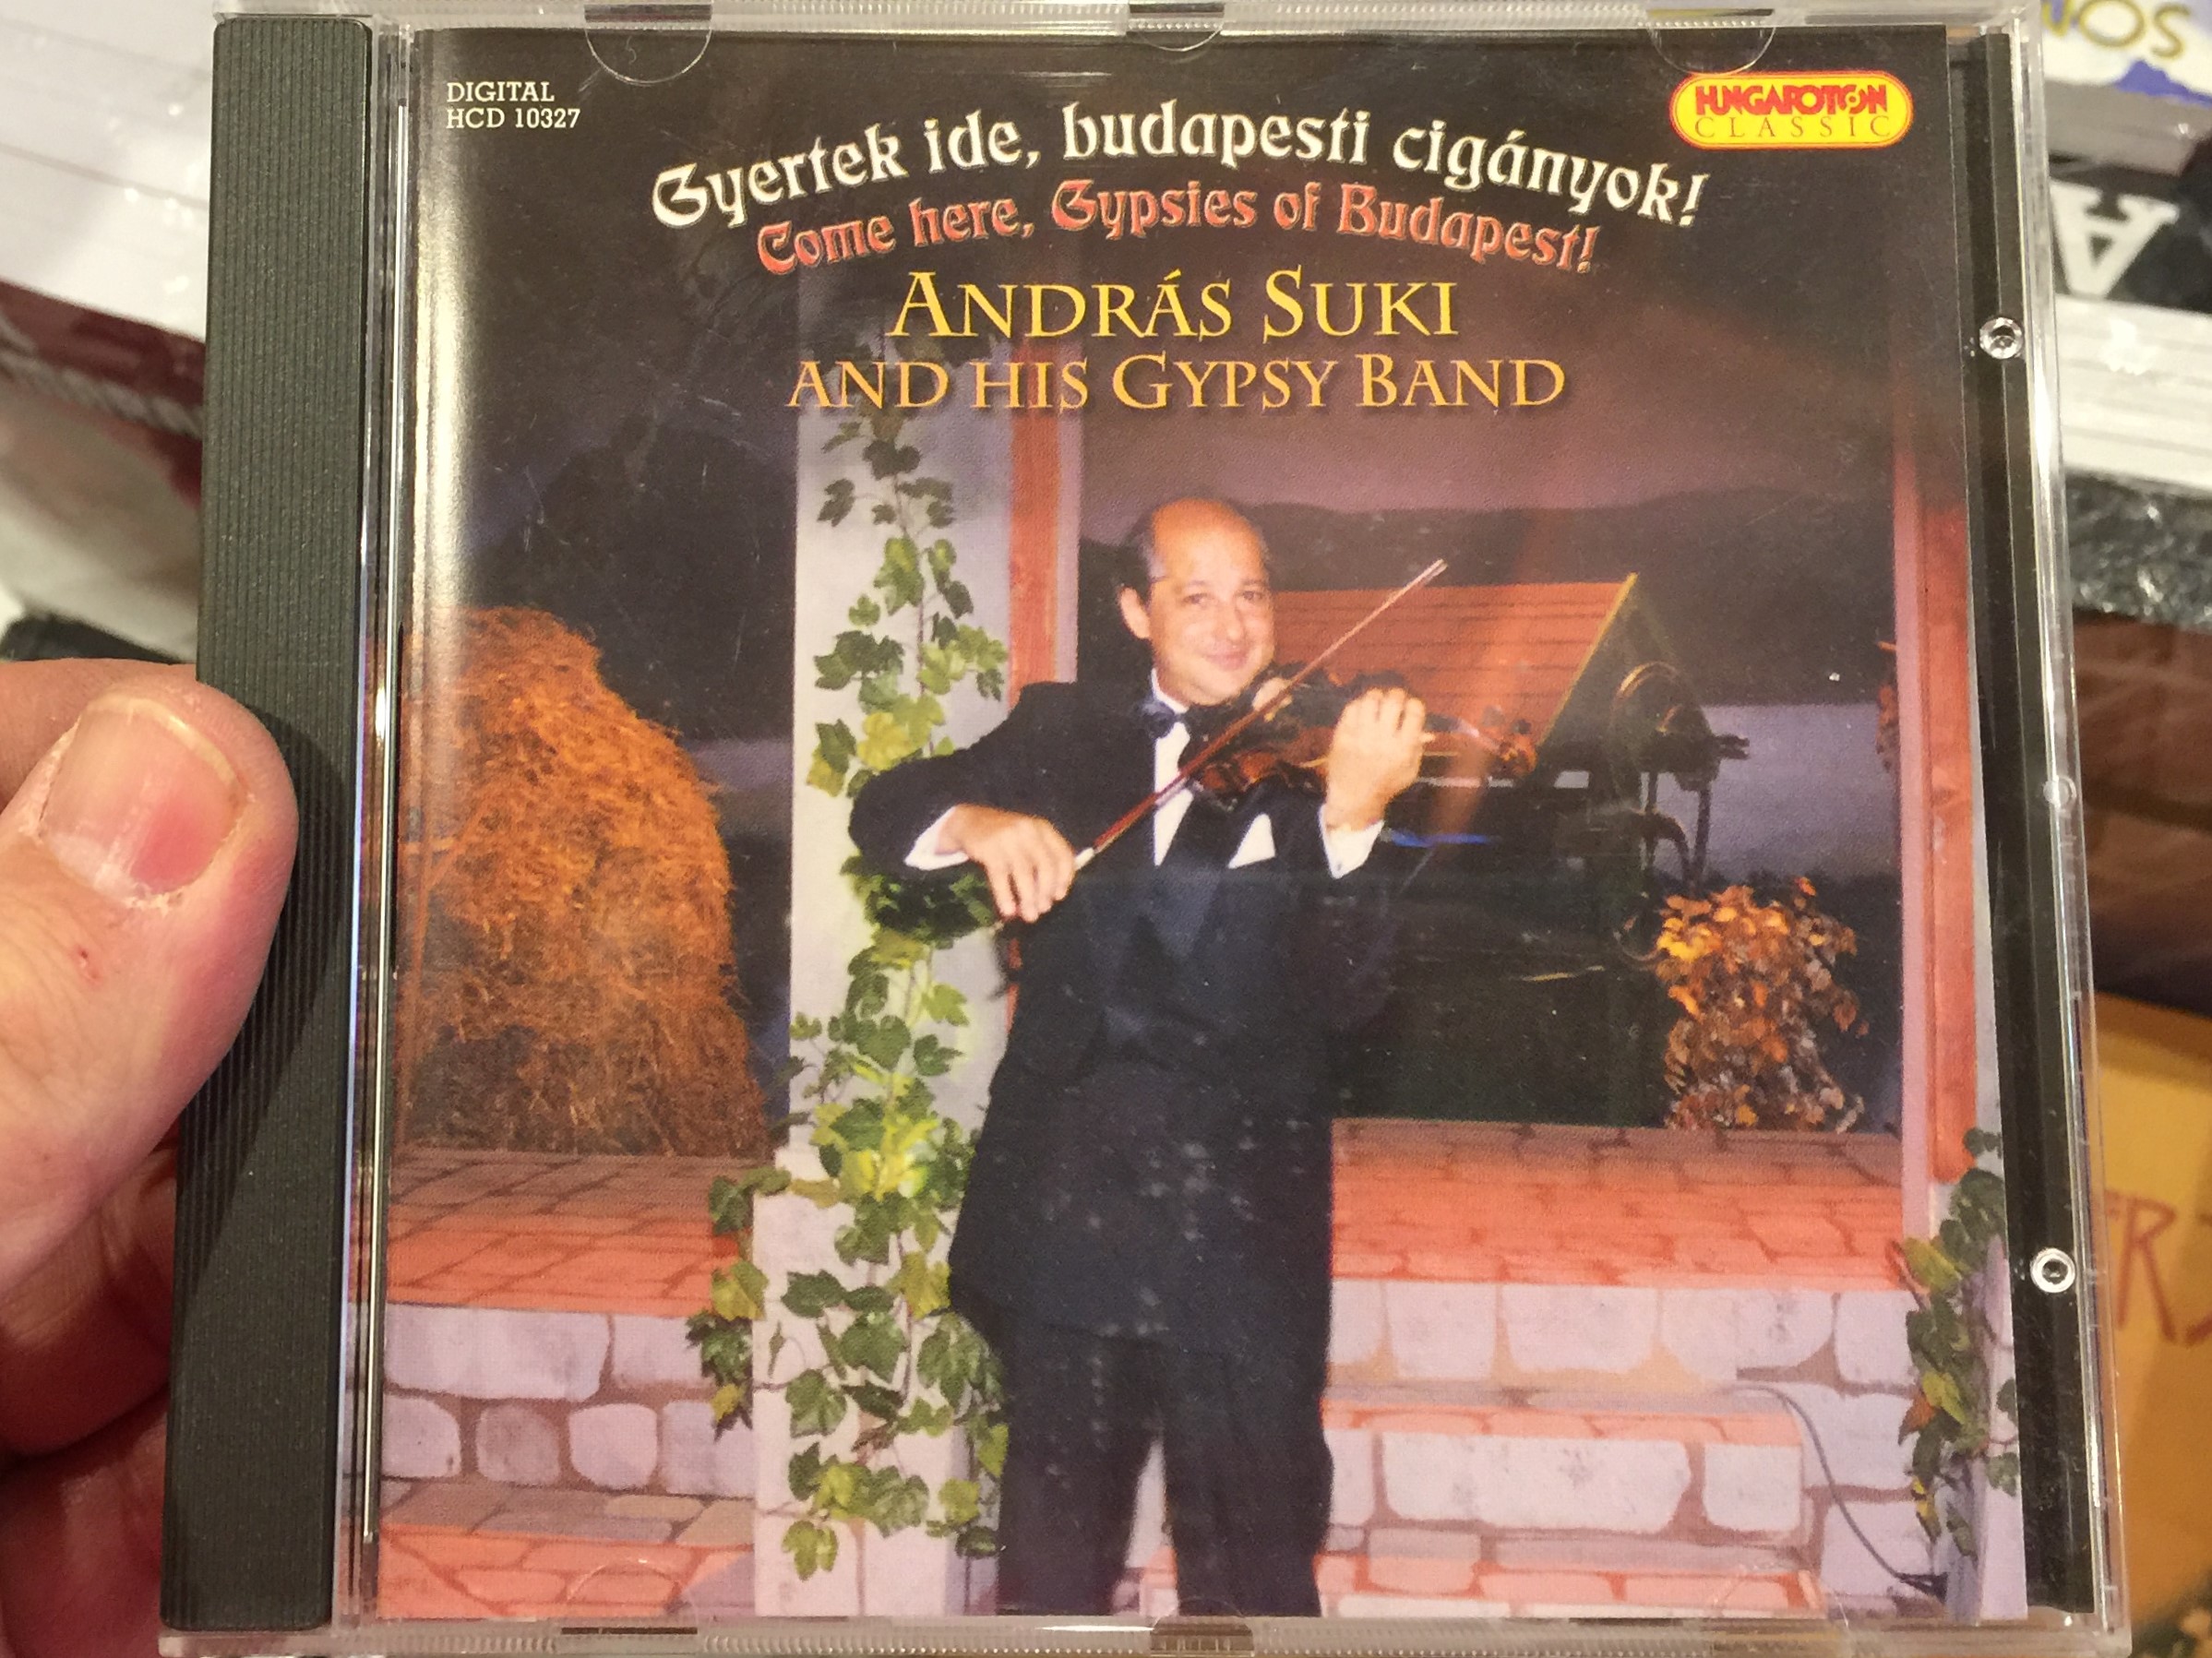 gyertek-ide-budapesti-ciganyok-come-here-gypsies-of-budapest-andras-suki-and-his-gypsy-band-hungaroton-classic-audio-cd-2006-stereo-hcd-10327-1-.jpg